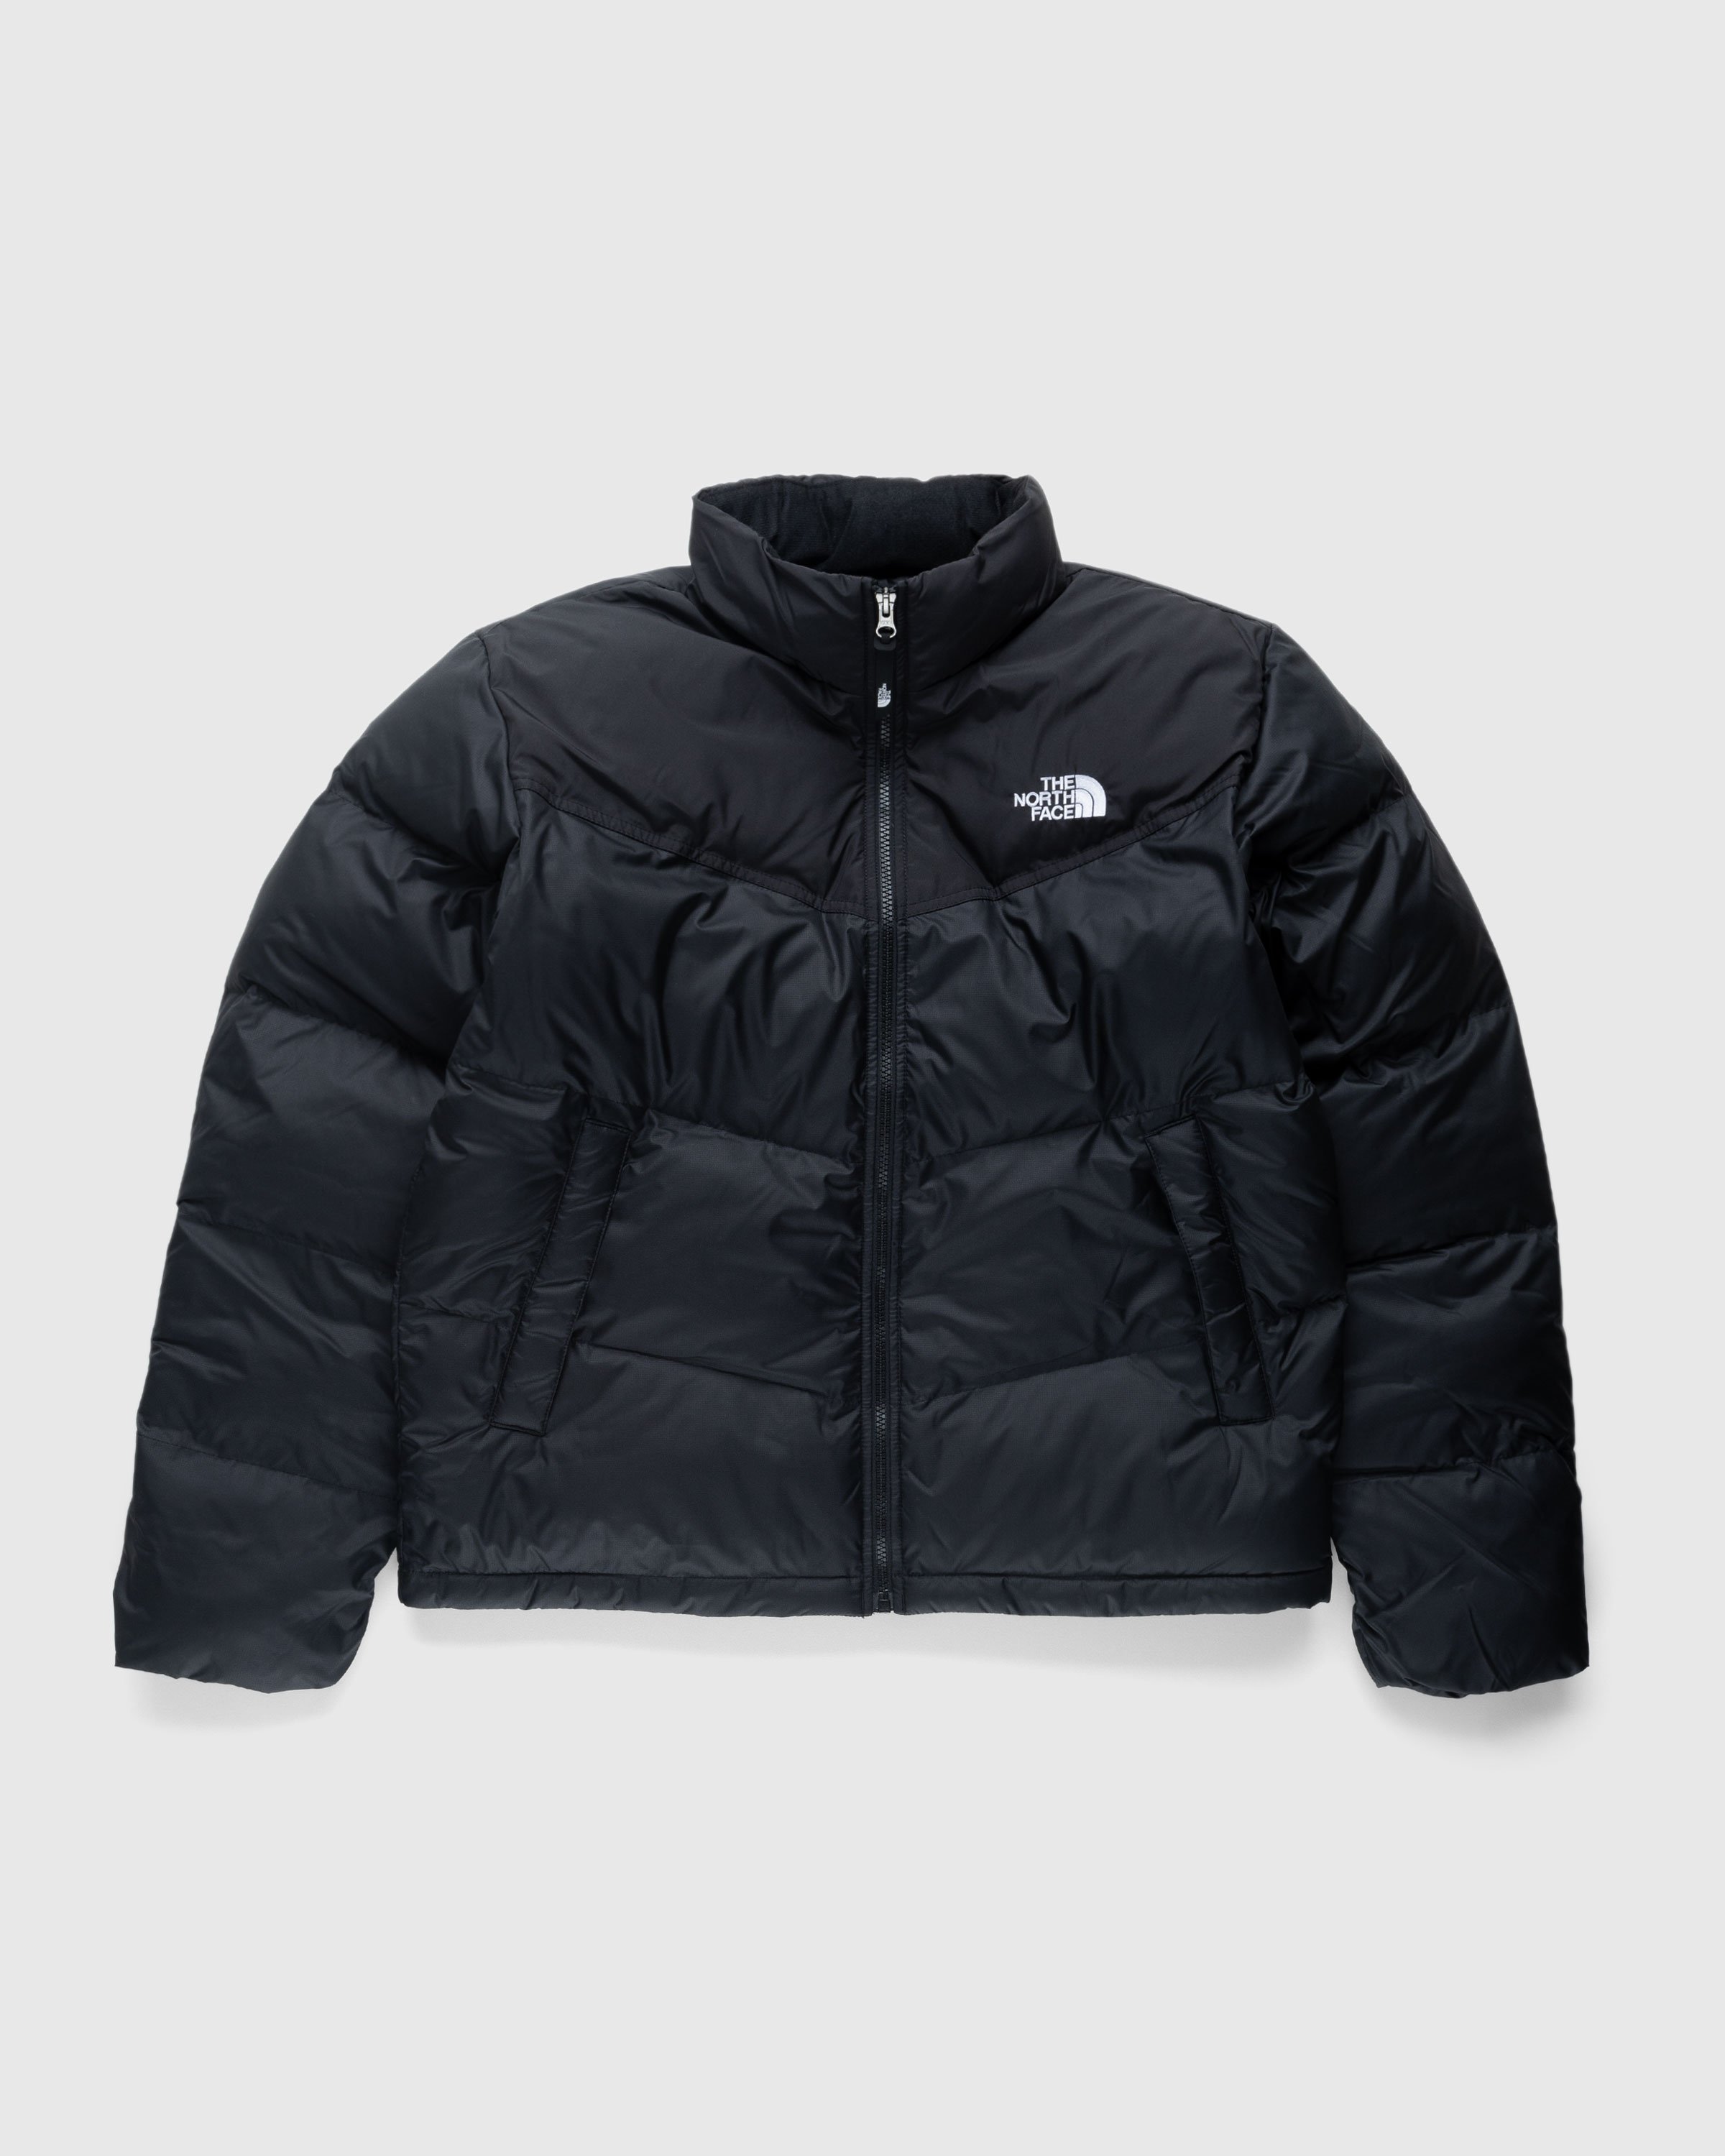 The North Face - Saikuru Jacket Black - Clothing - Black - Image 1